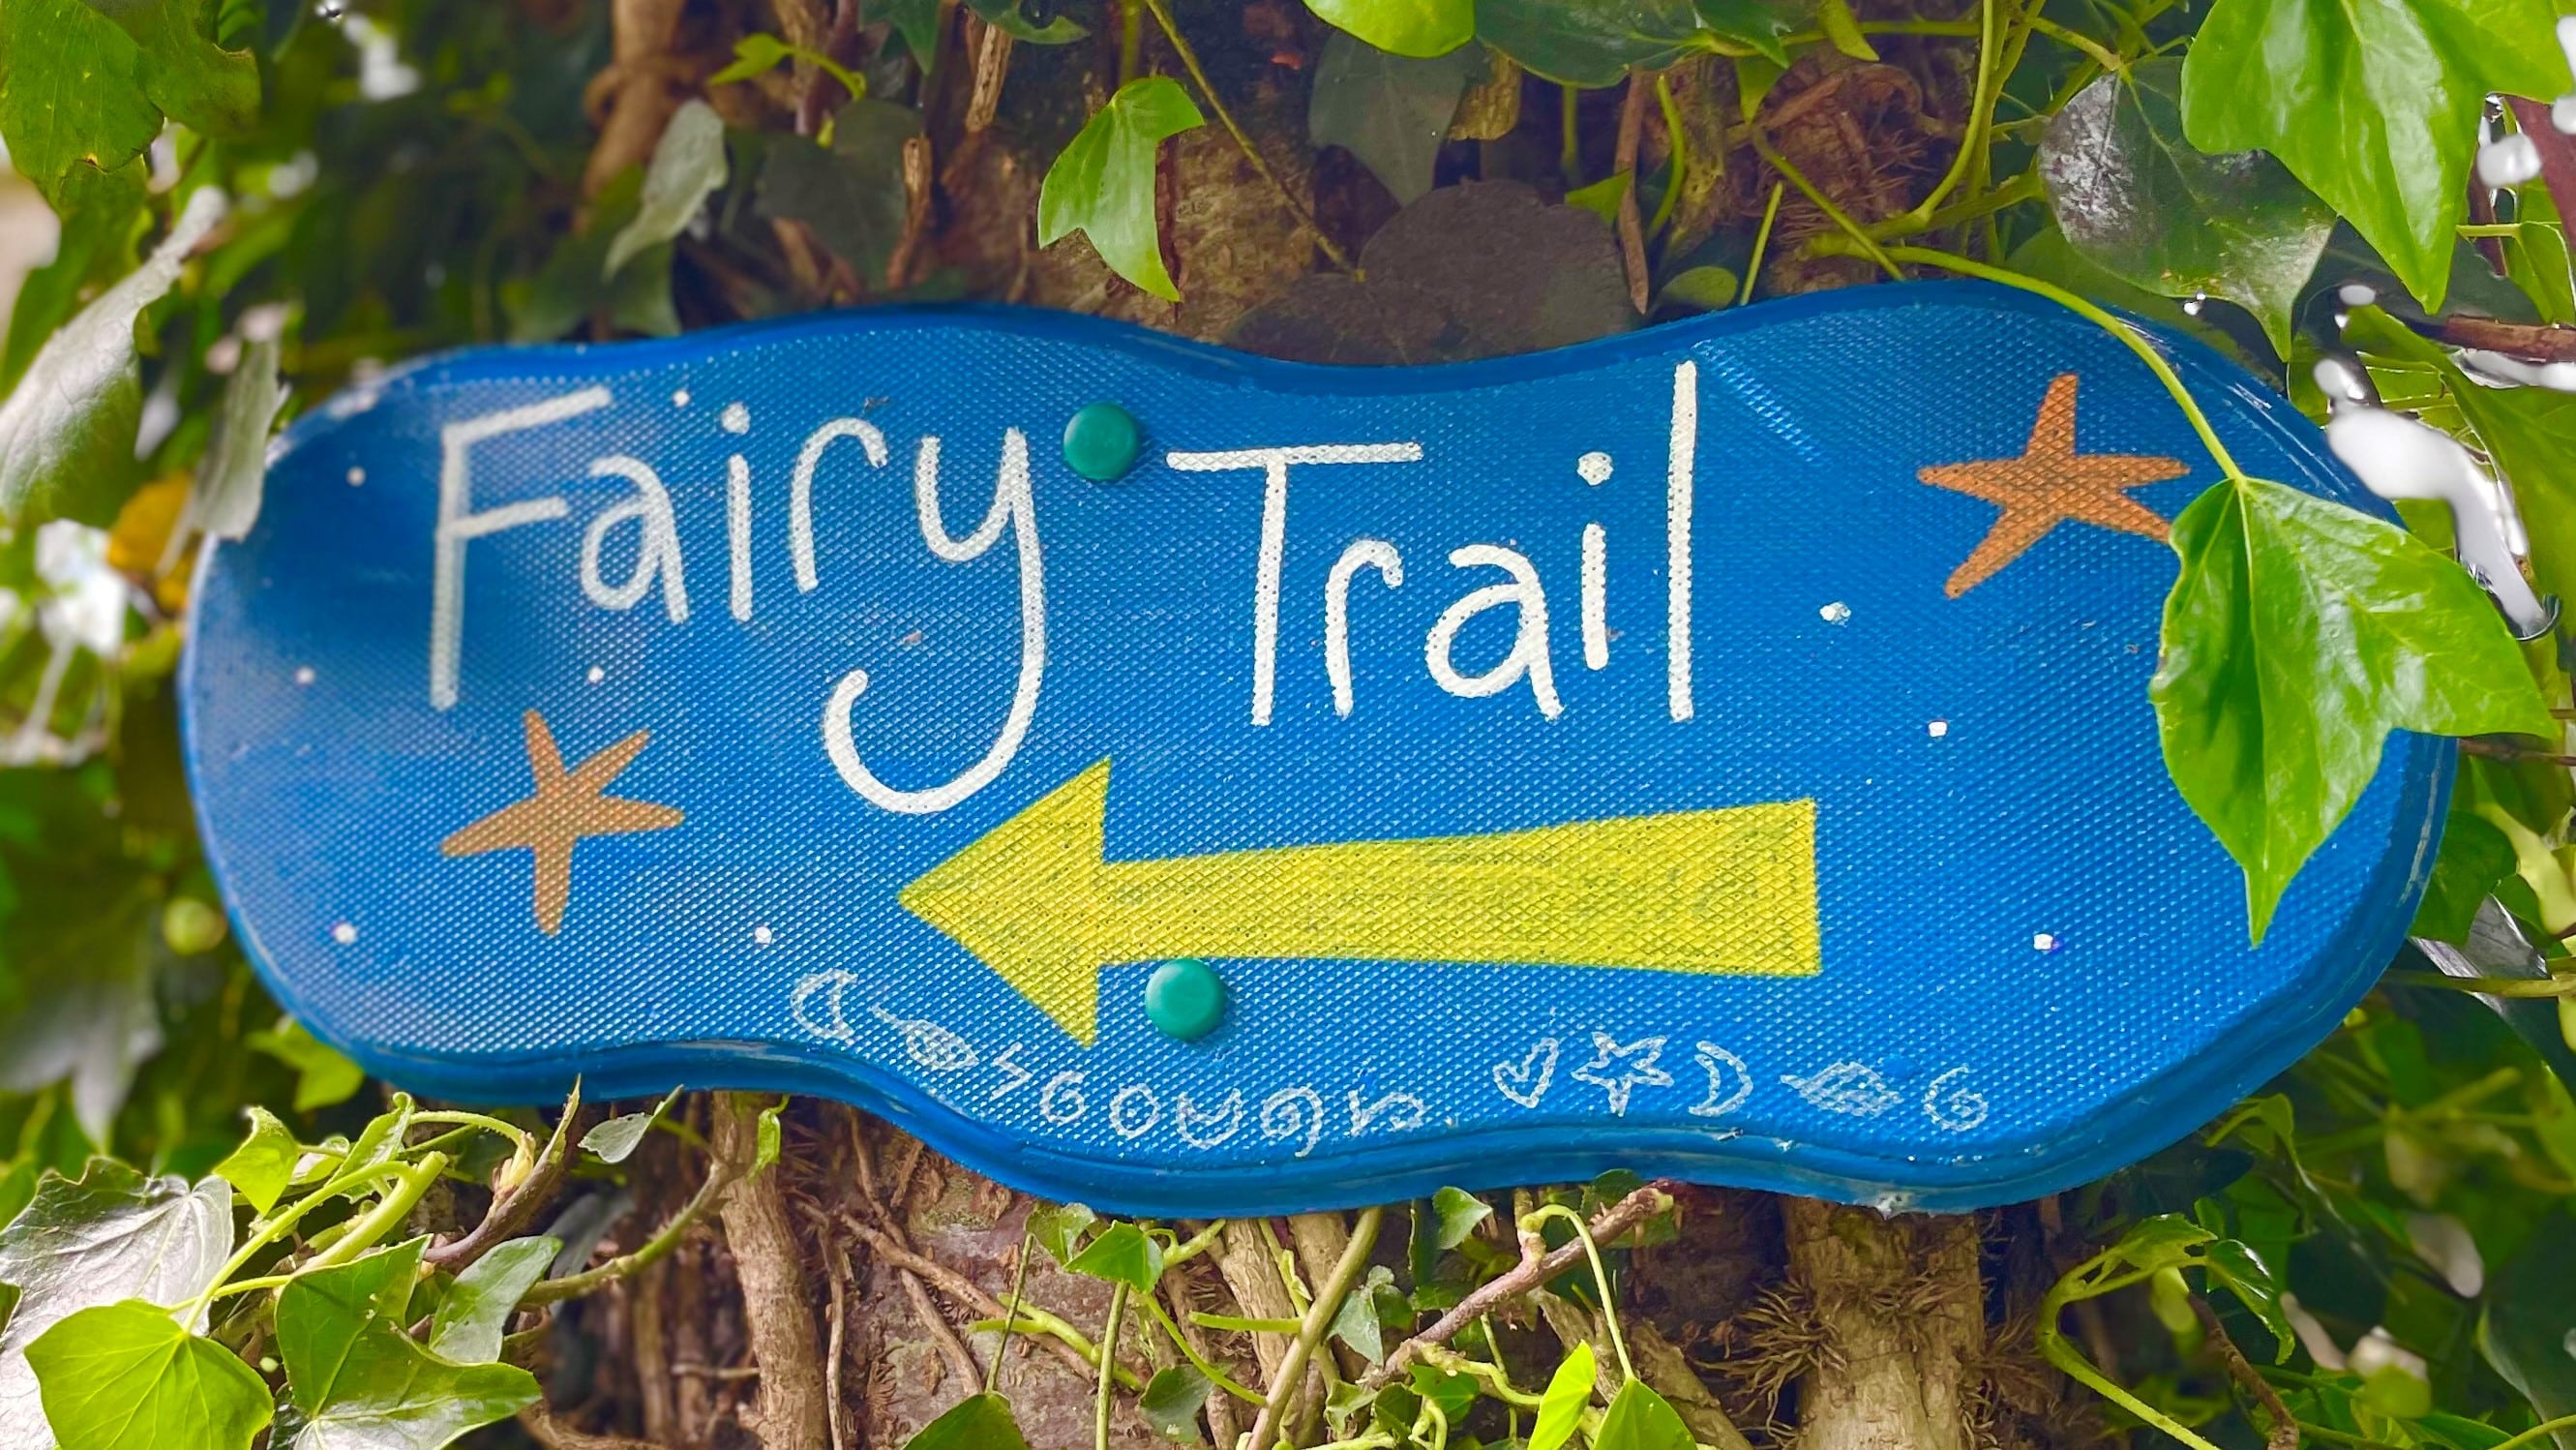 fairy trail sign